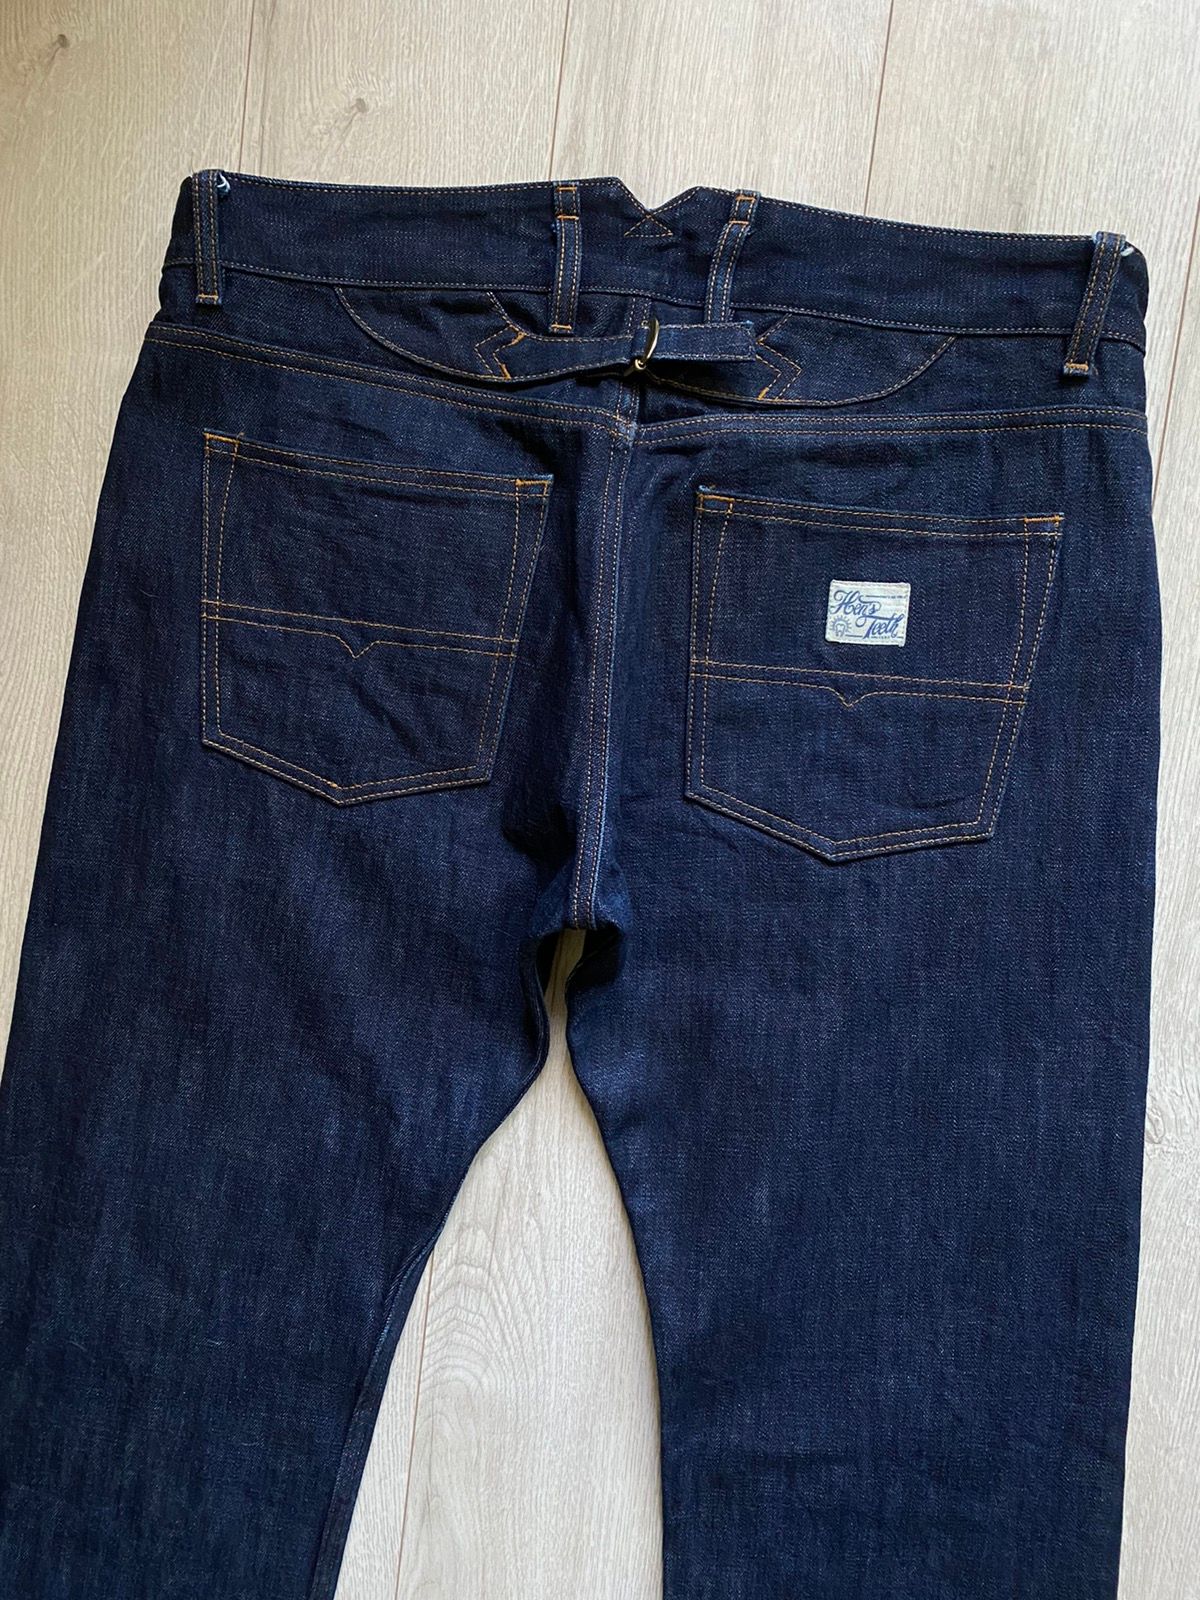 Italian Designers Hens Teeth jeans selvedge Italian denim original 14,3 Oz Size US 36 / EU 52 - 5 Thumbnail